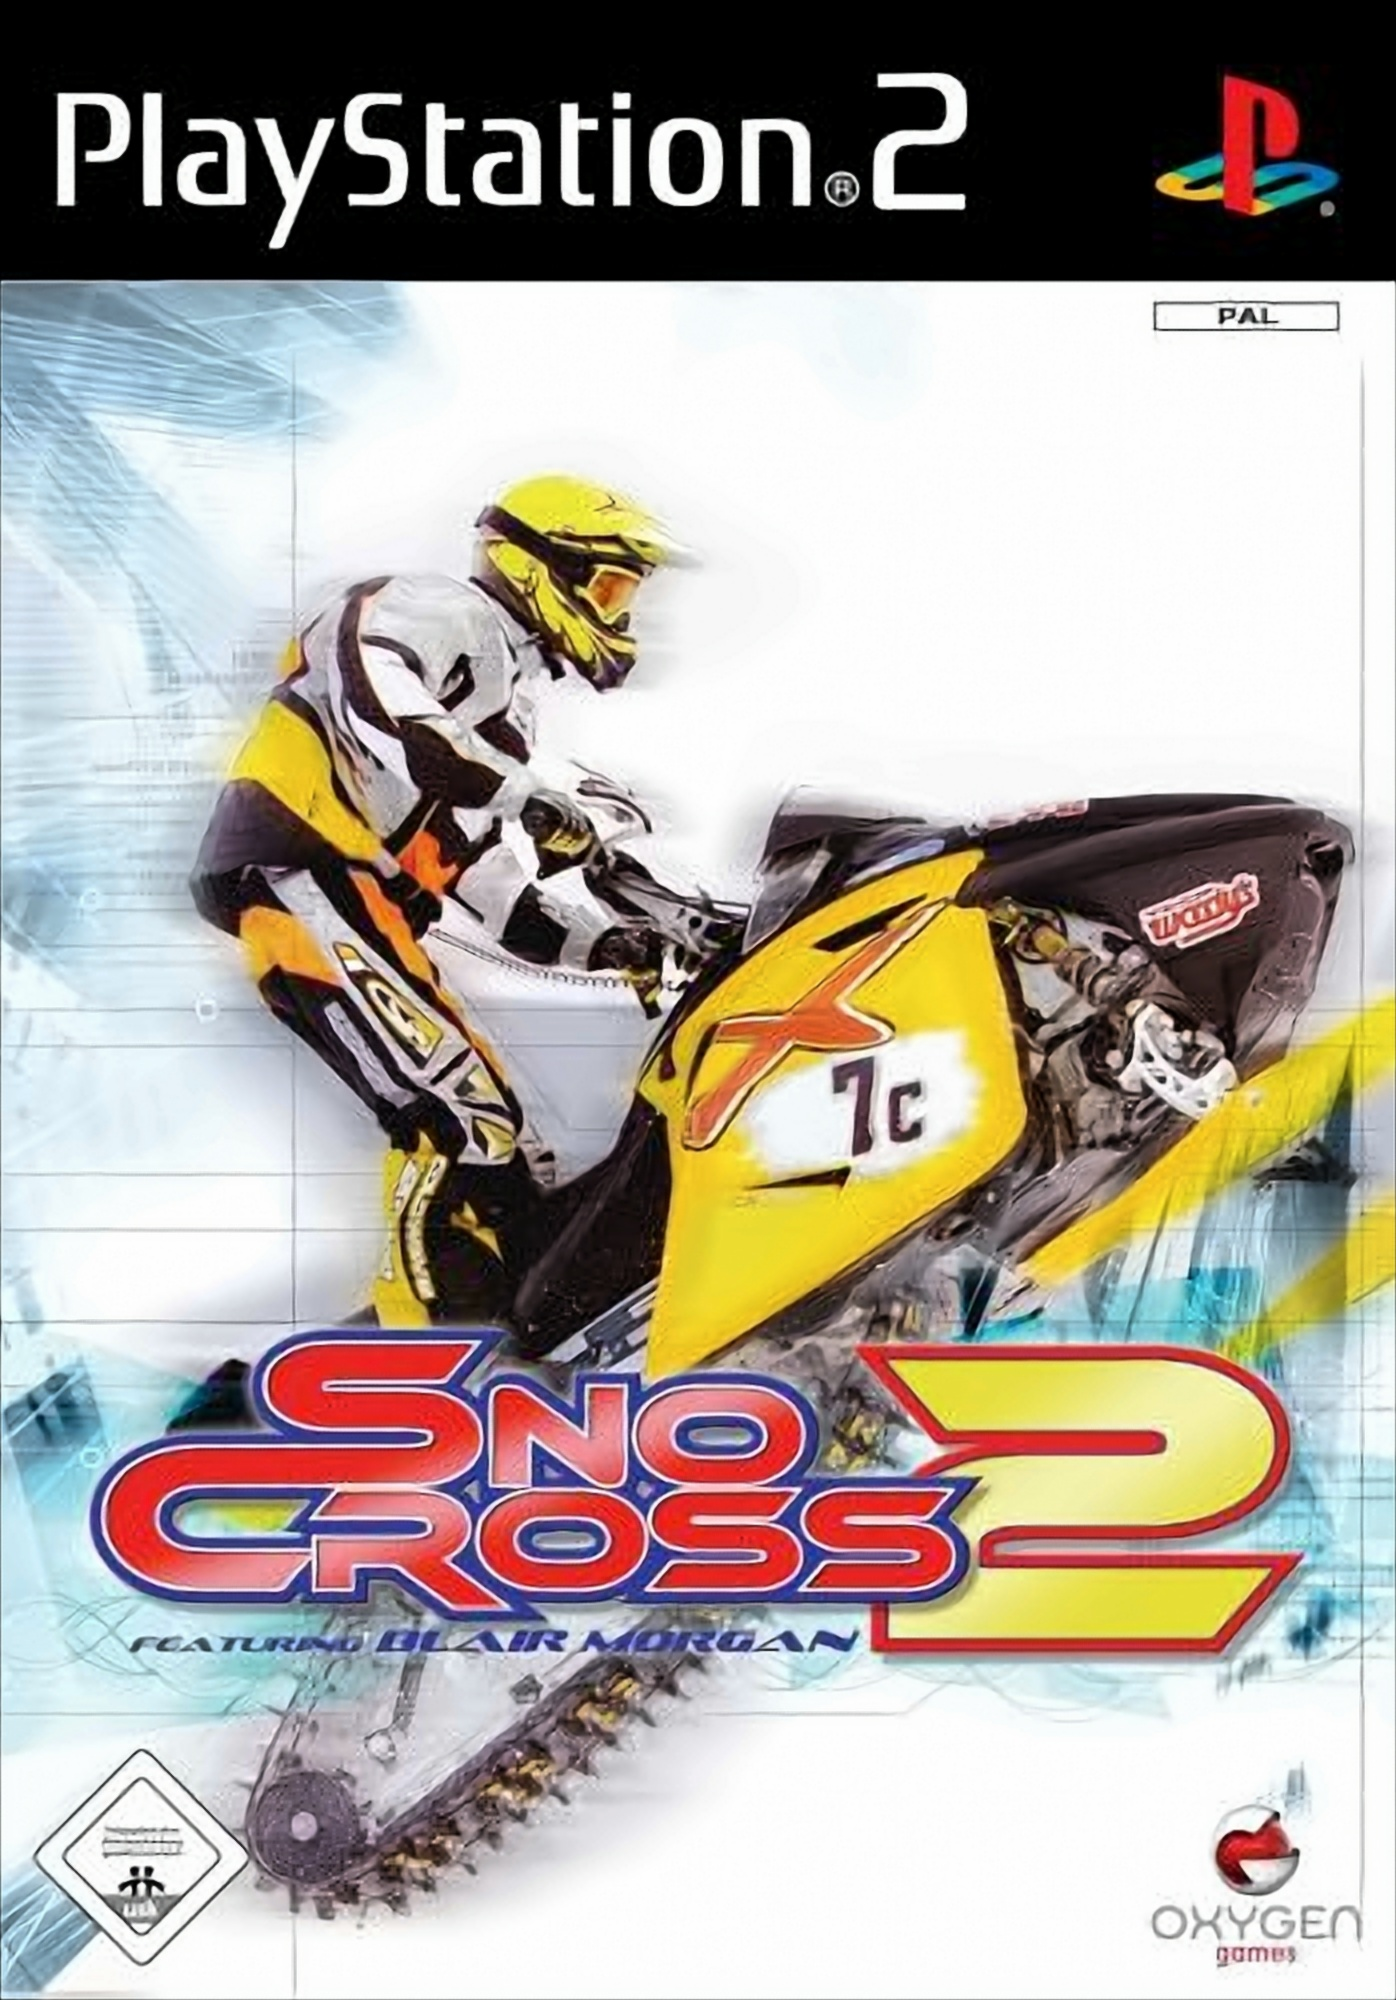 feat. 2] - Cross Blair [PlayStation 2 Morgan Sno